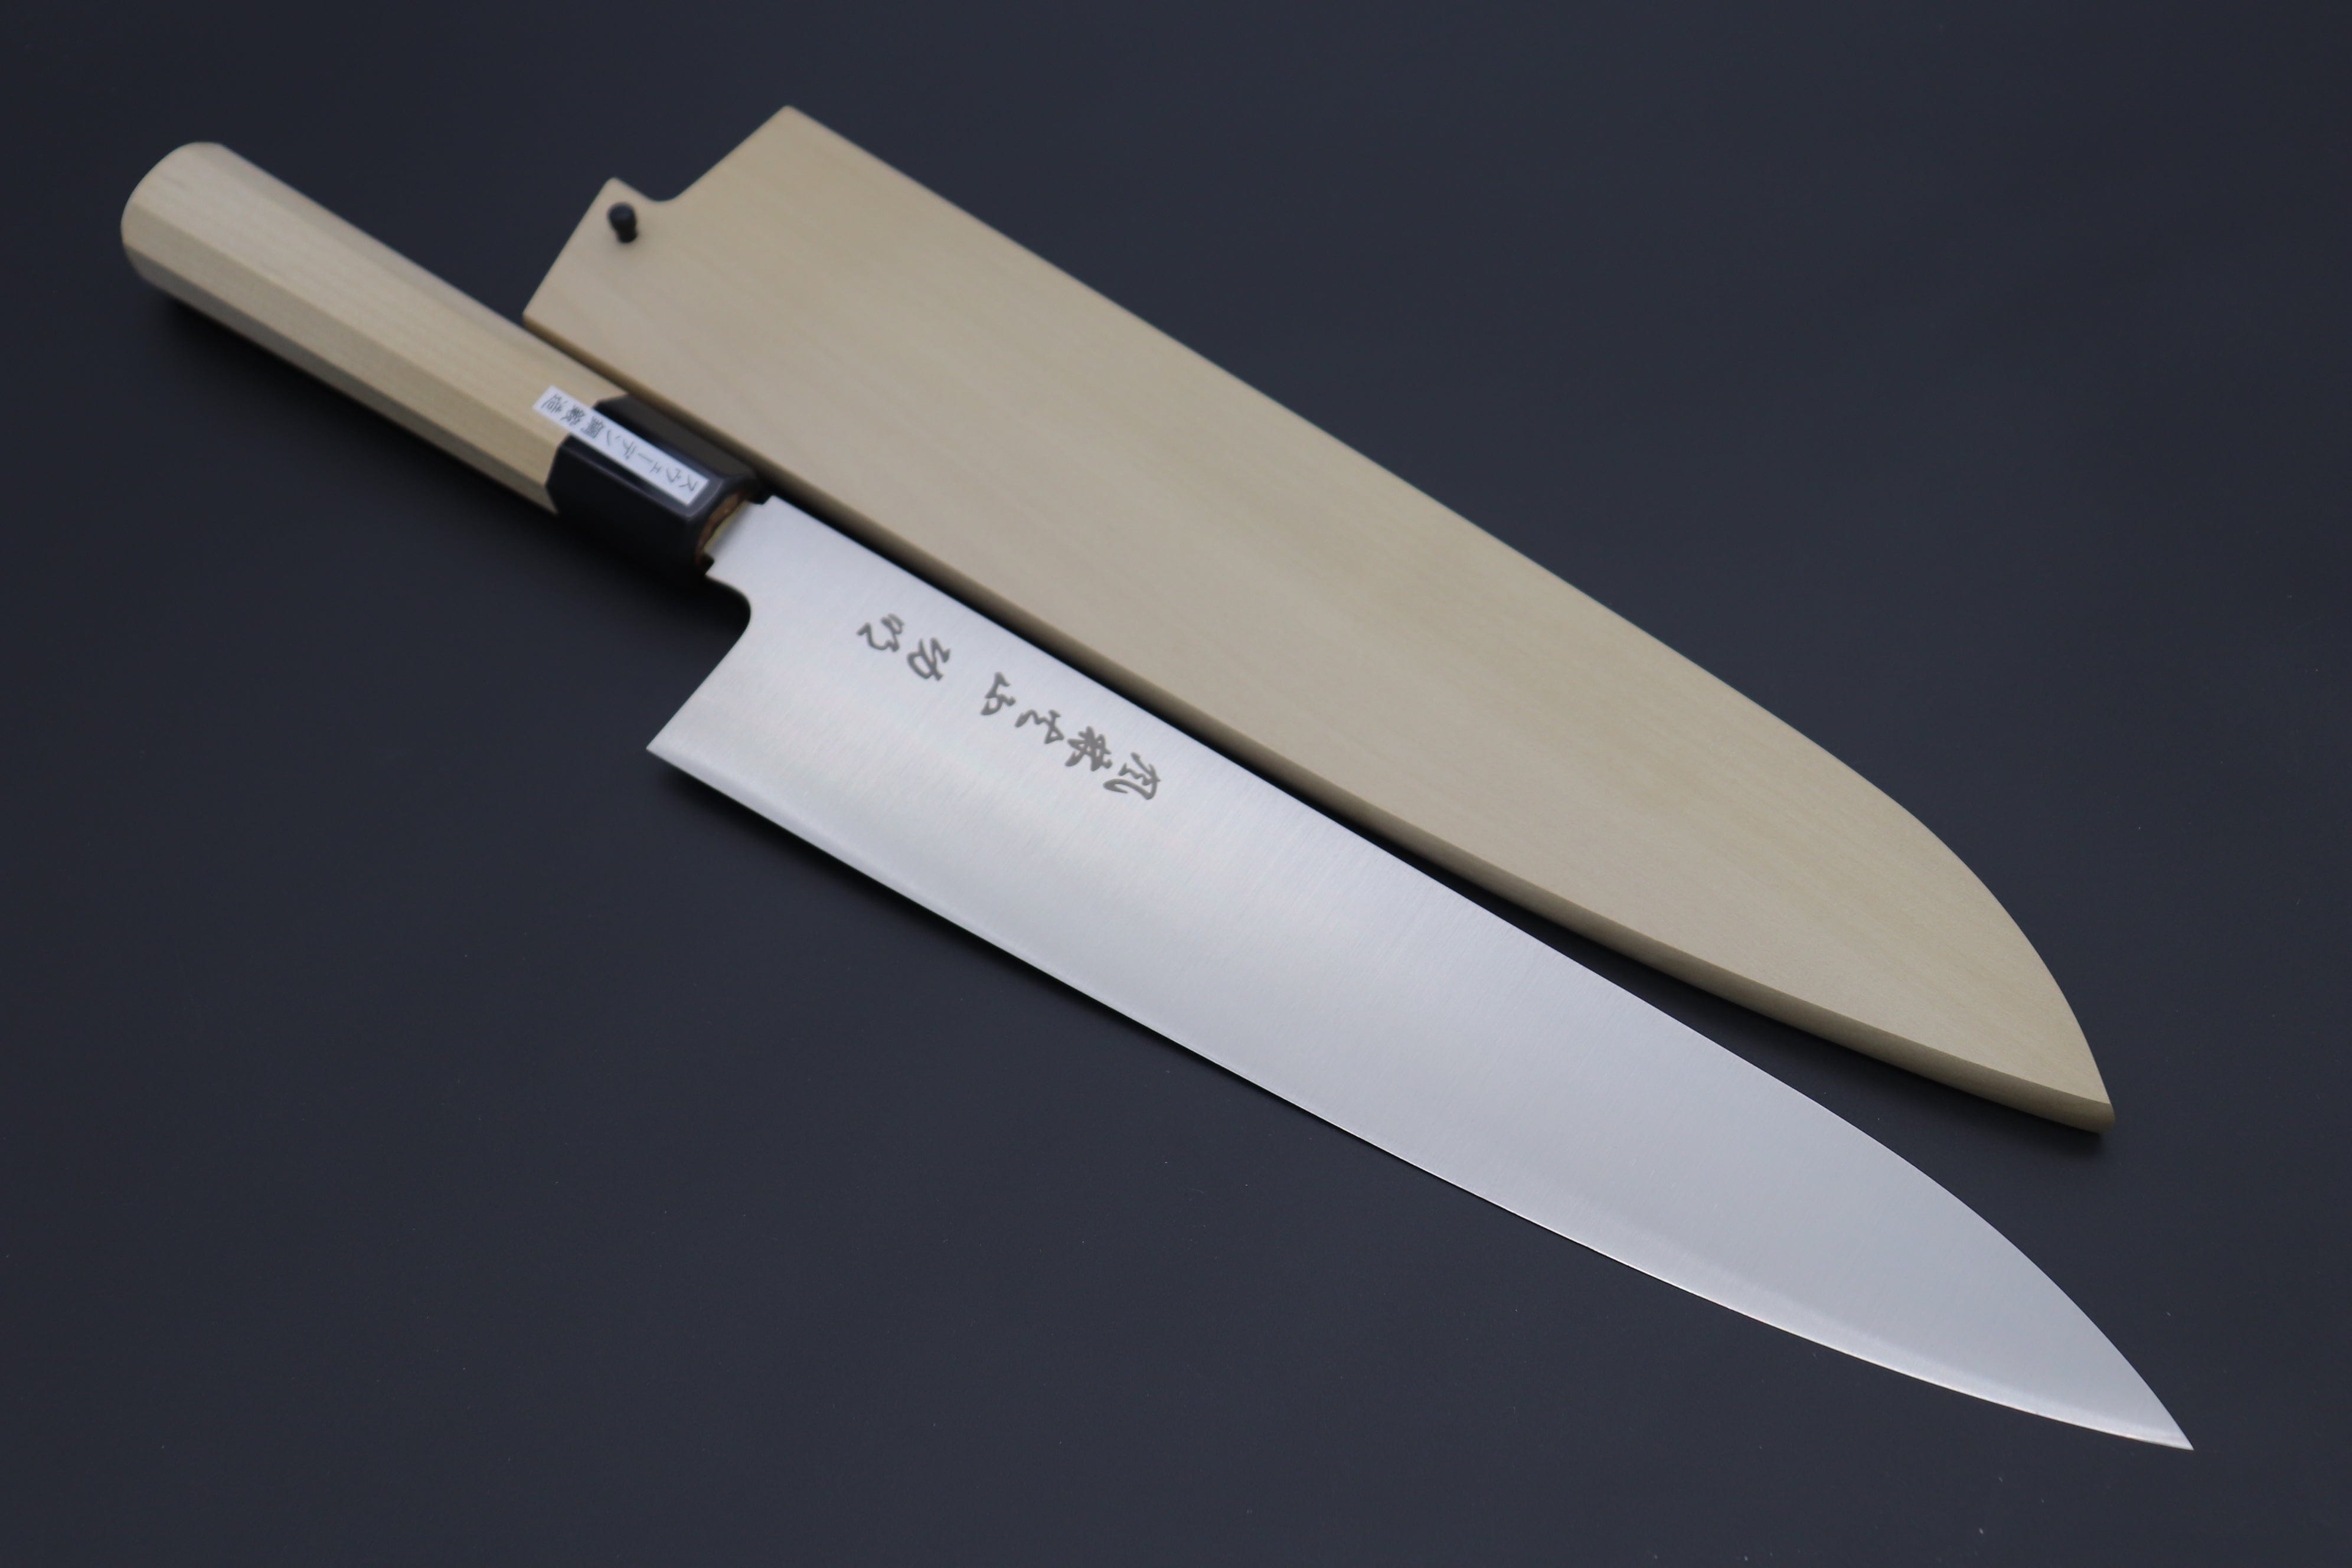 50cr15mov Kitchen Knives Set Utility Chef Knife, Japanese Chef Knife